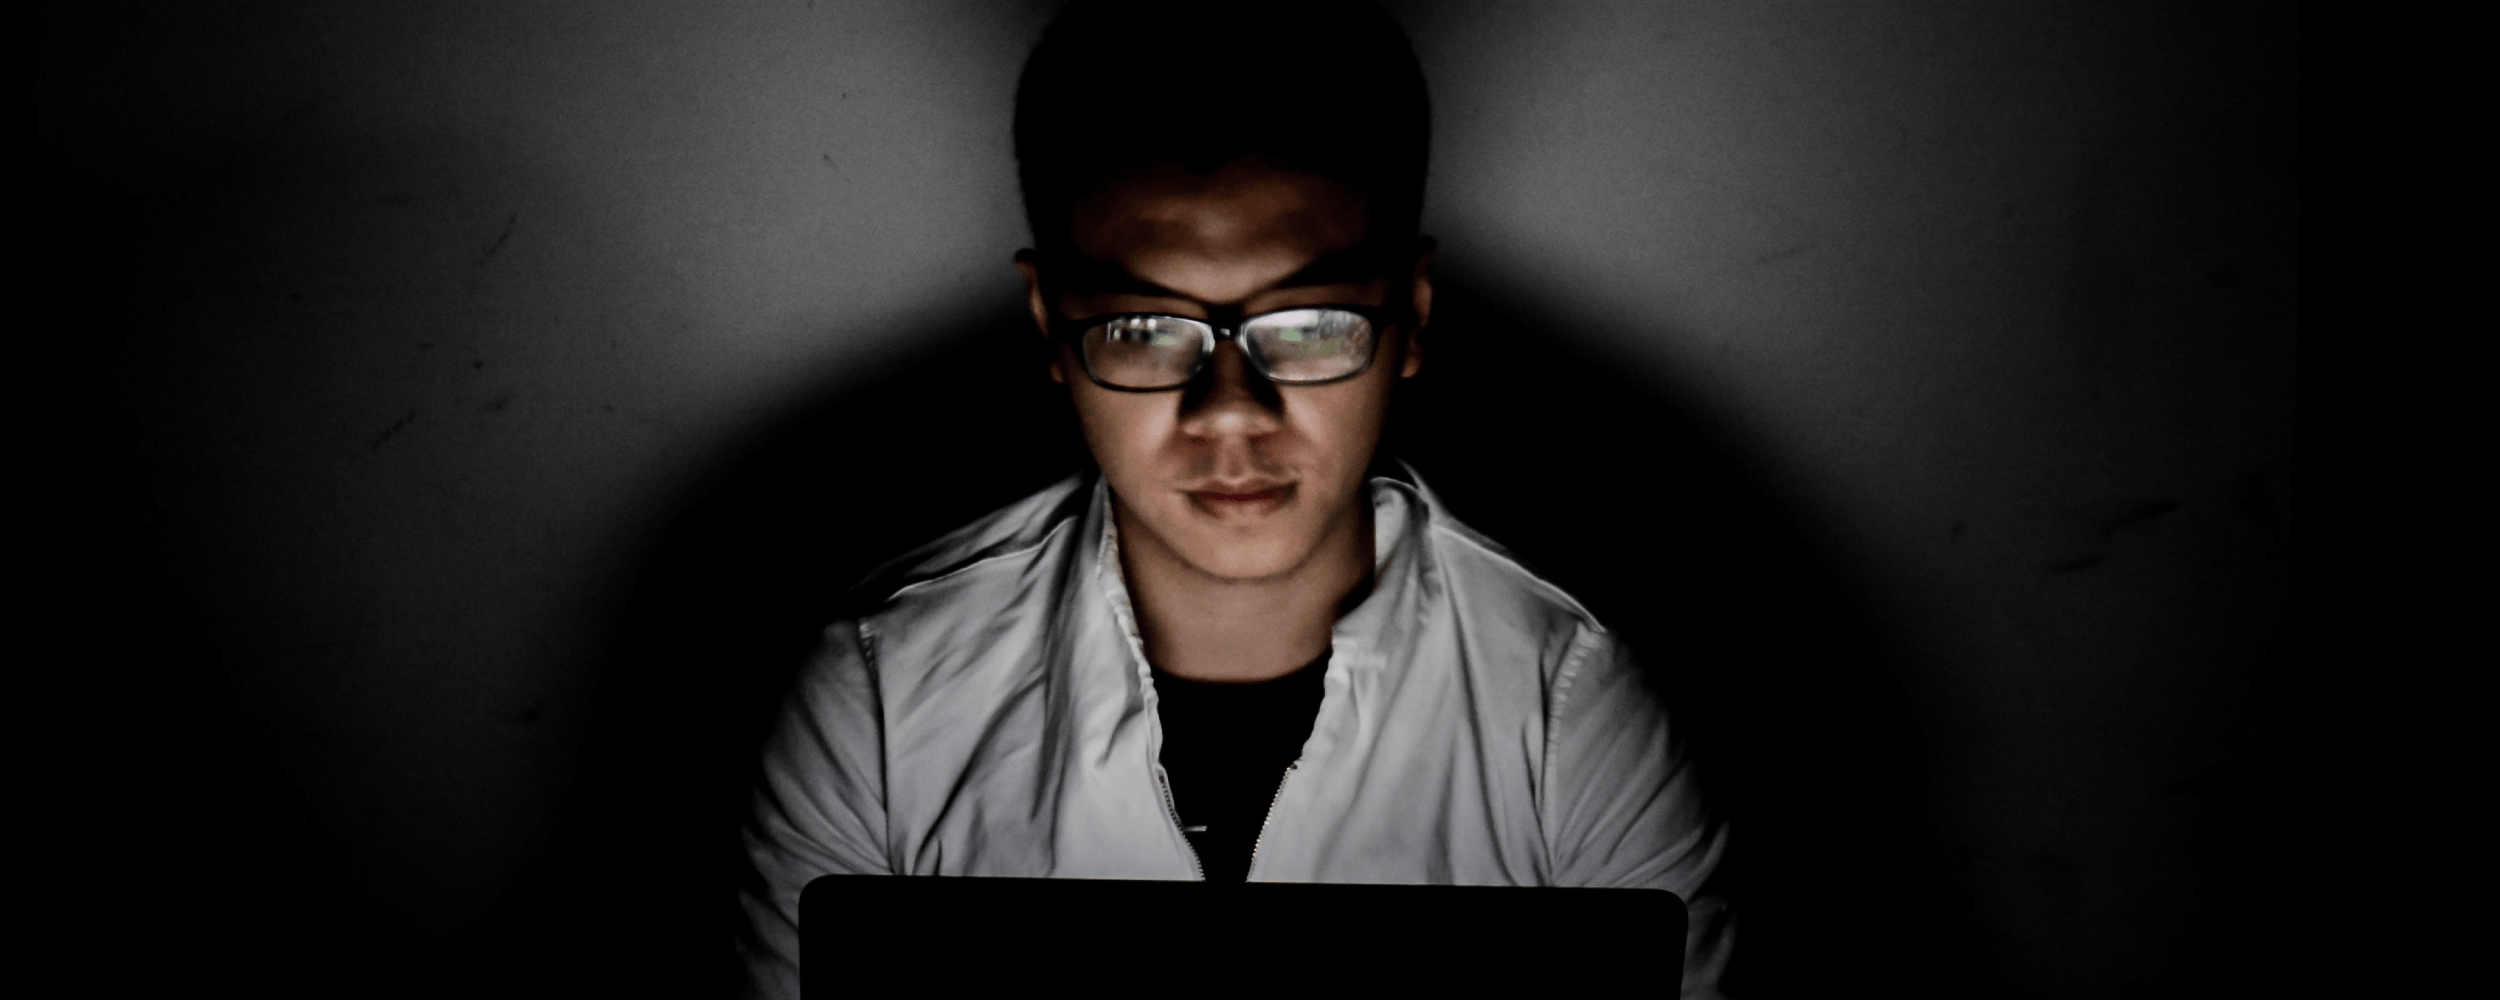 Man on computer in dark room